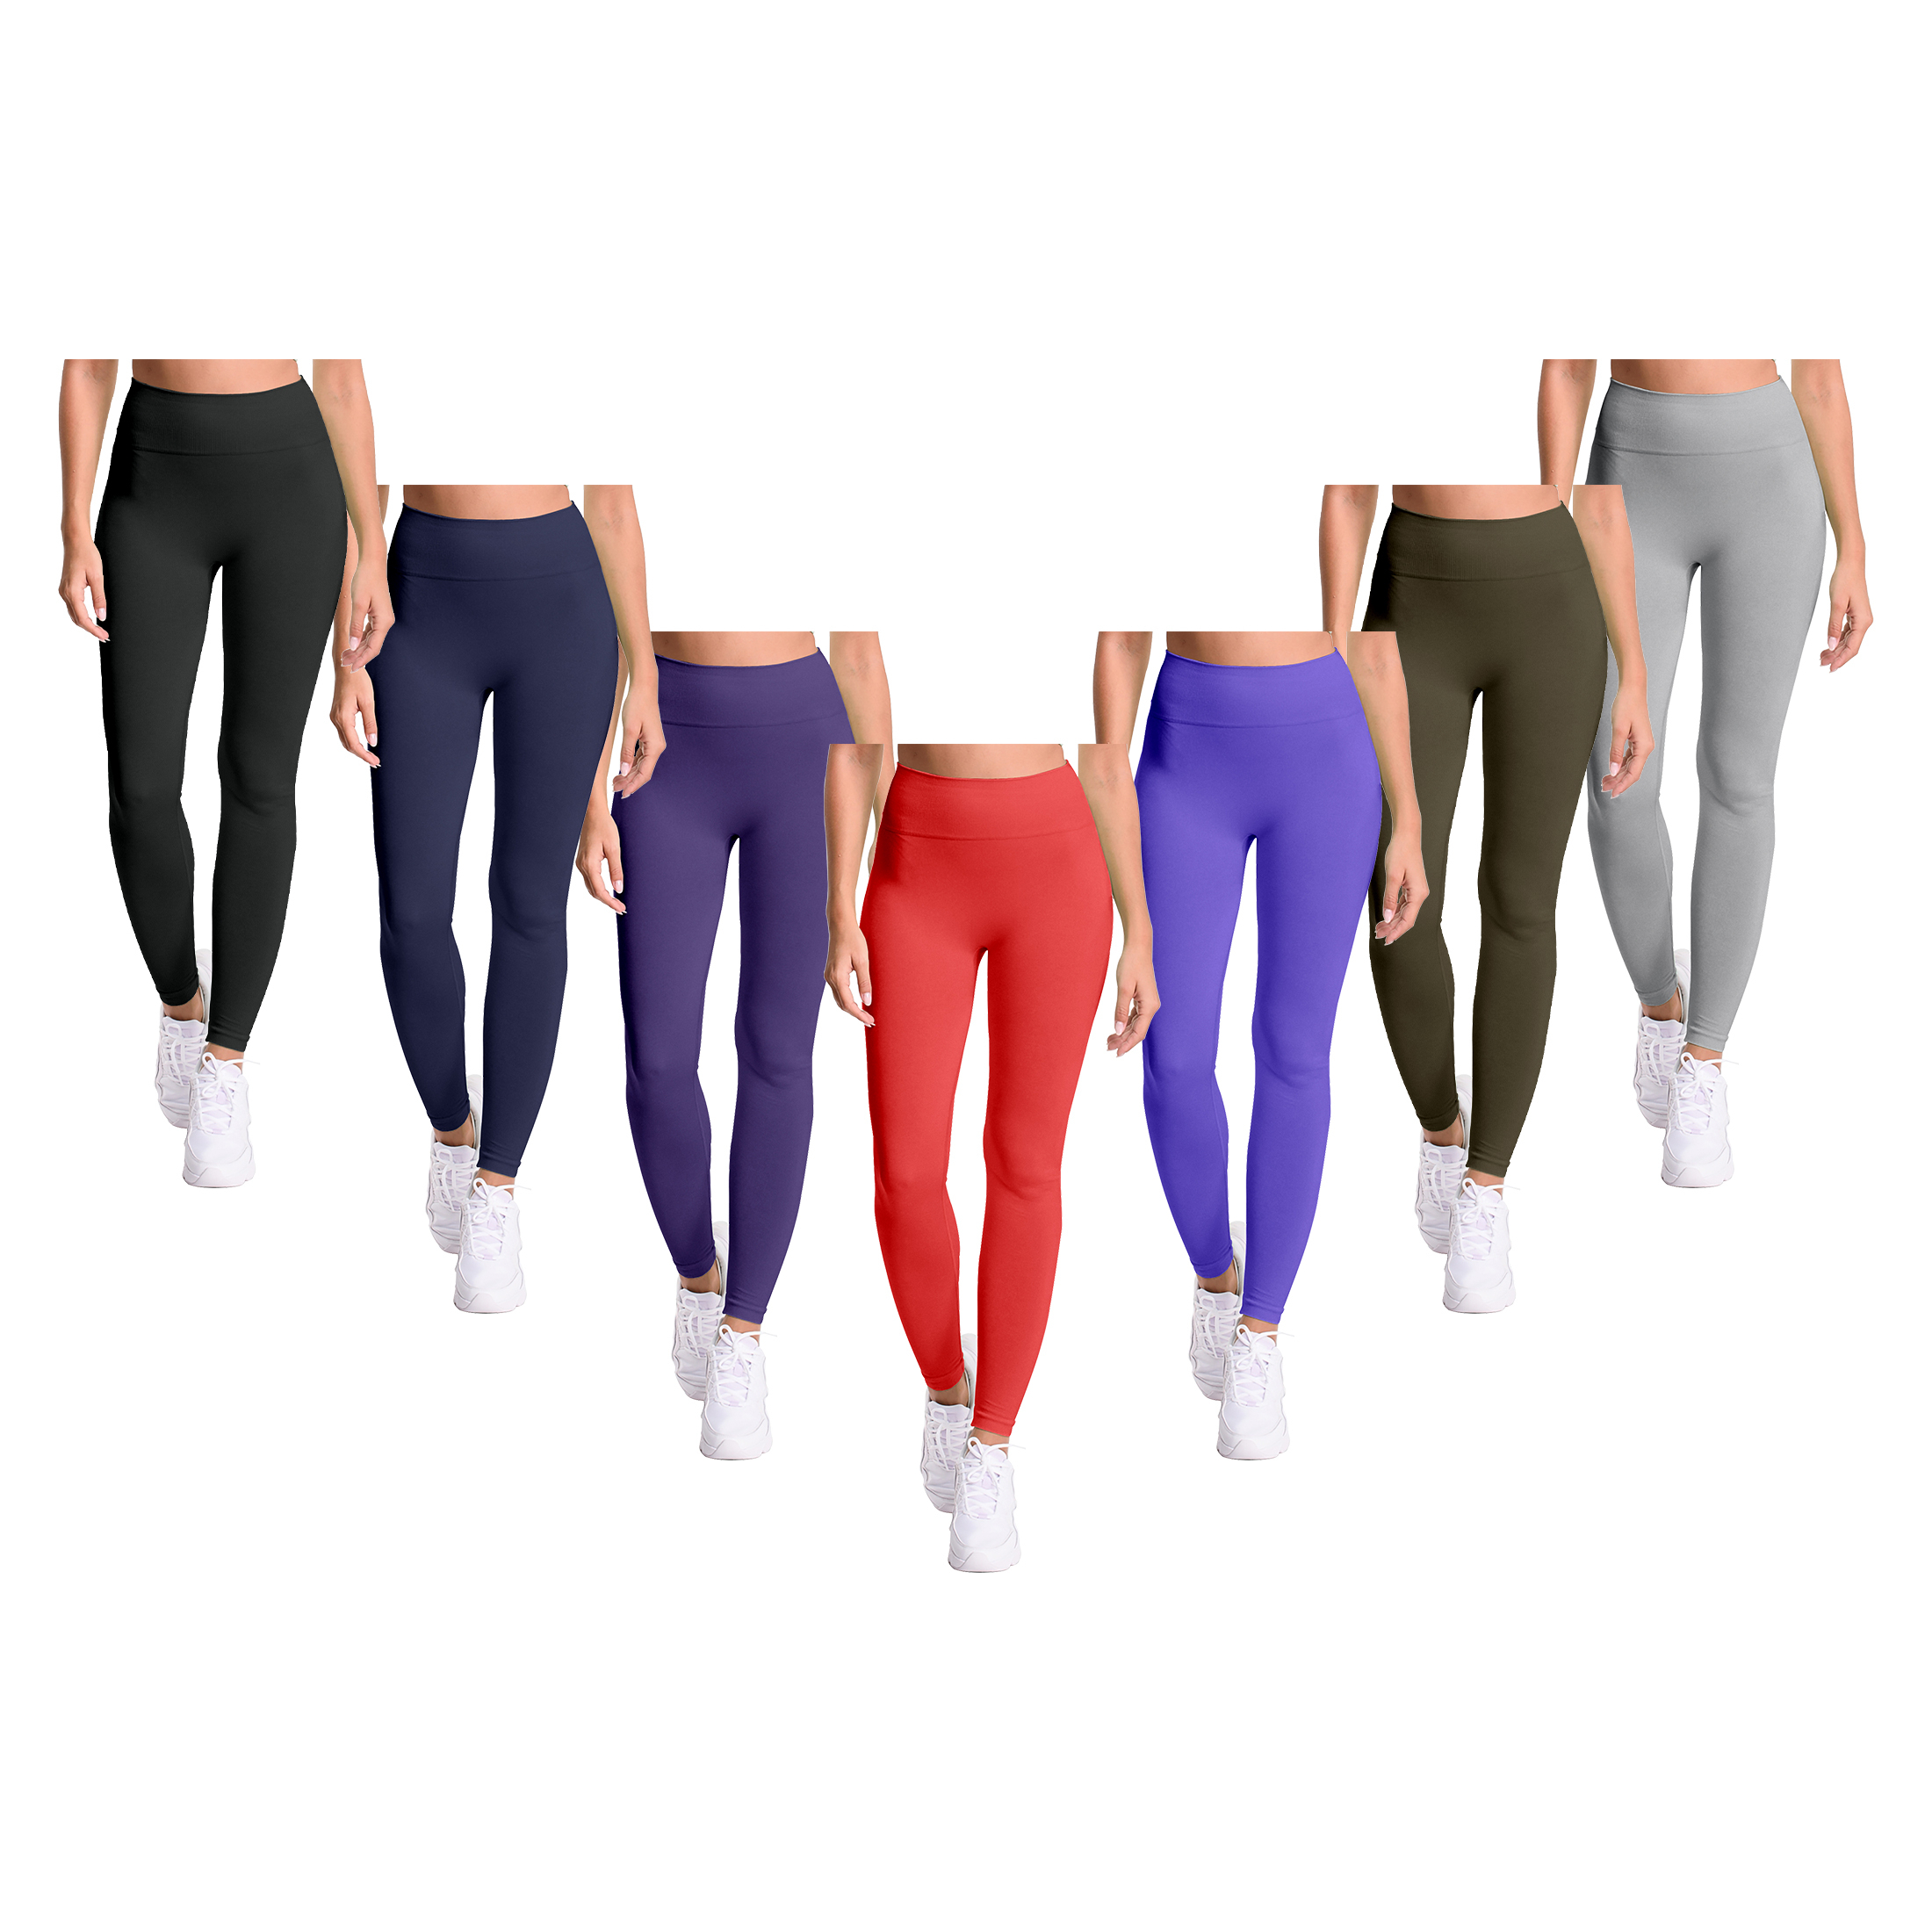 3-Pack: Women's Cozy Fleece-Lined Workout Yoga Pants Seamless Leggings - Large